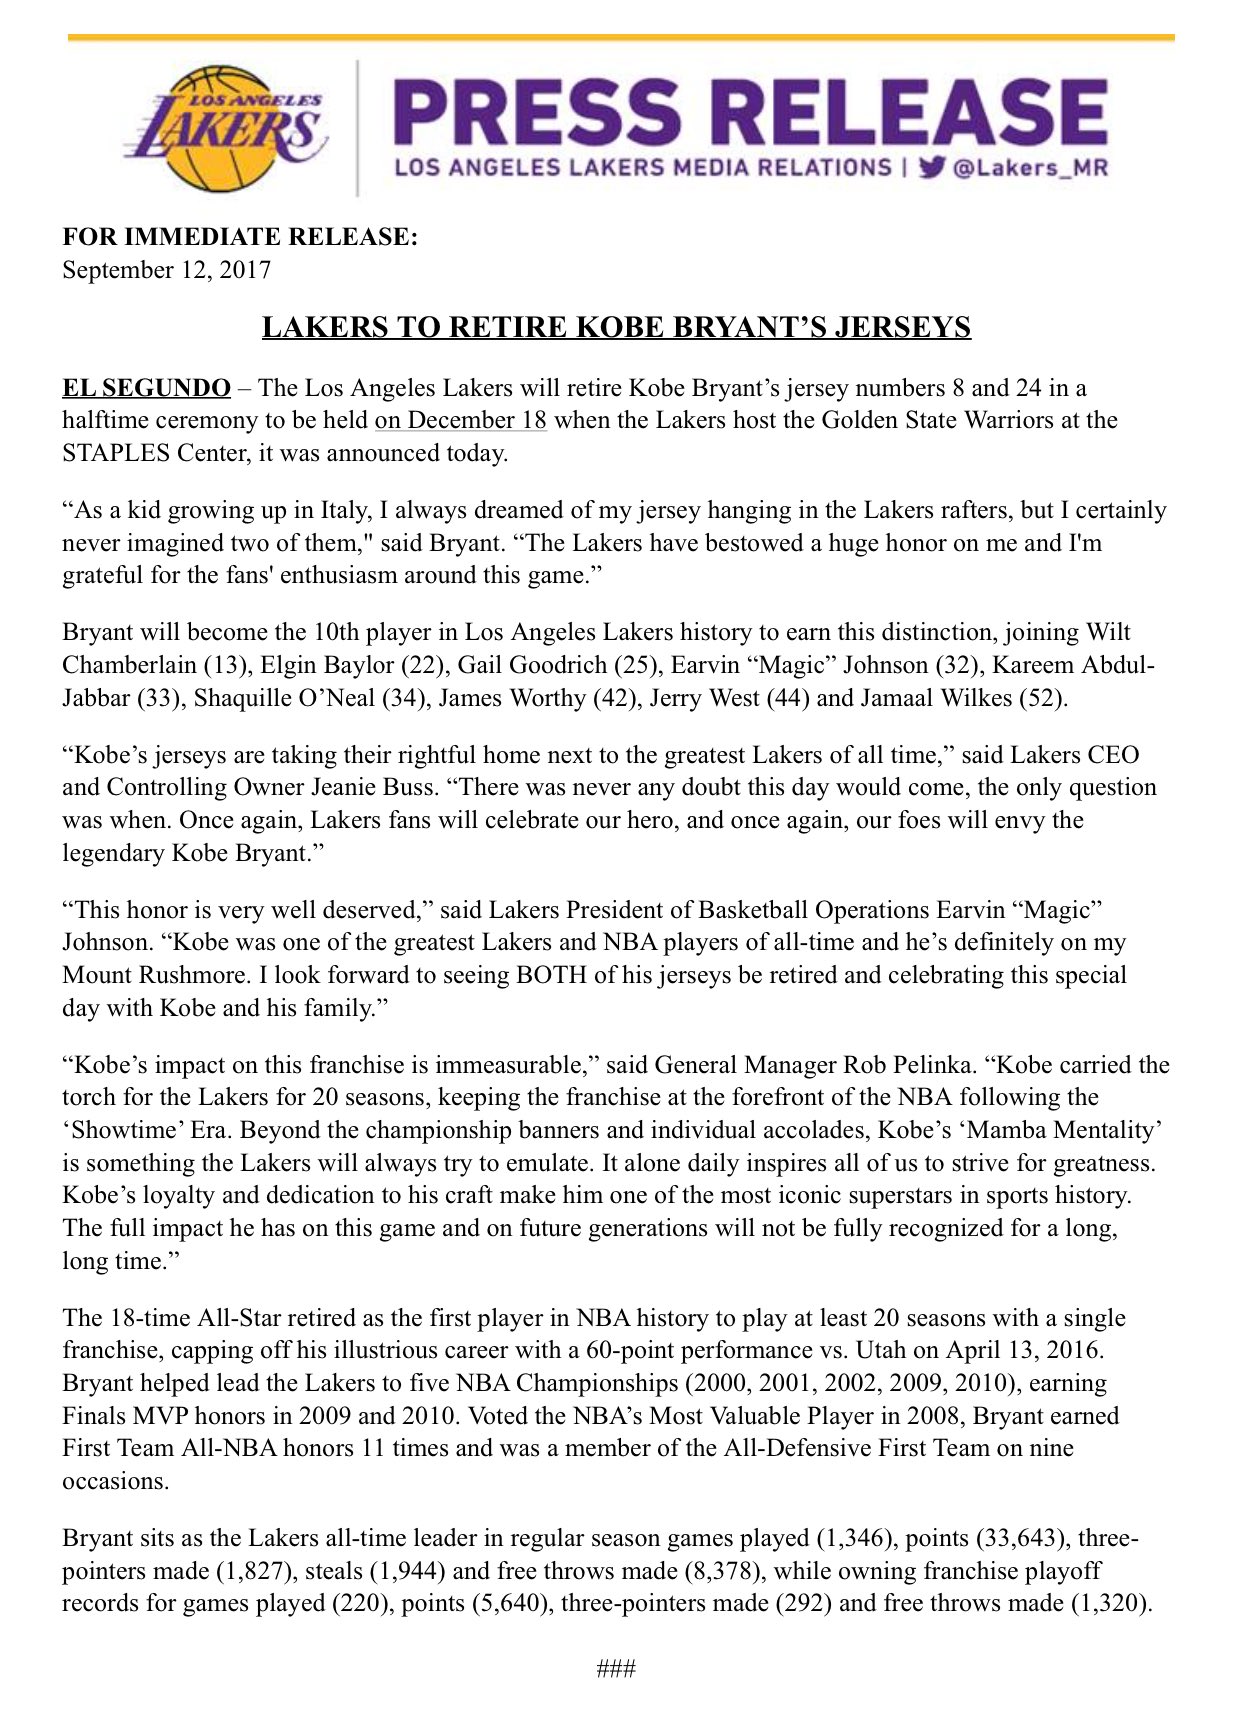 Lakers retire both of Kobe Bryant's jerseys